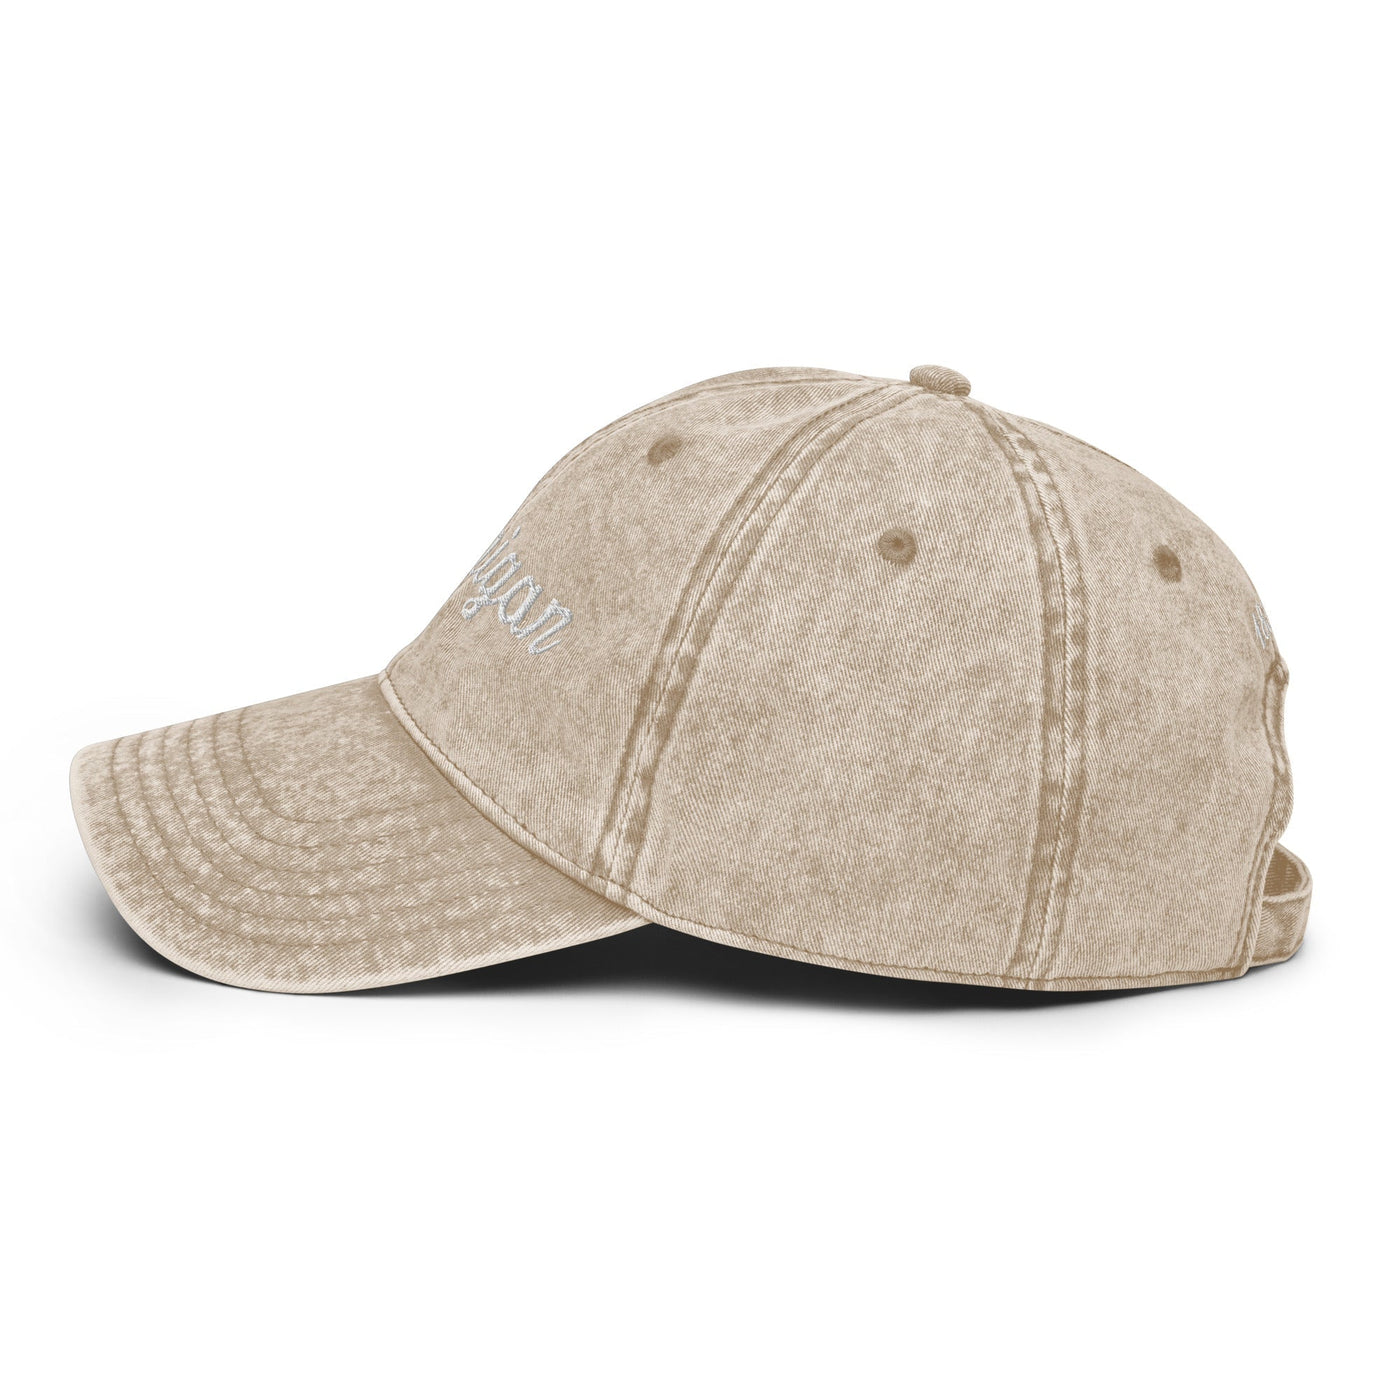 Michigan Hat - Ezra's Clothing